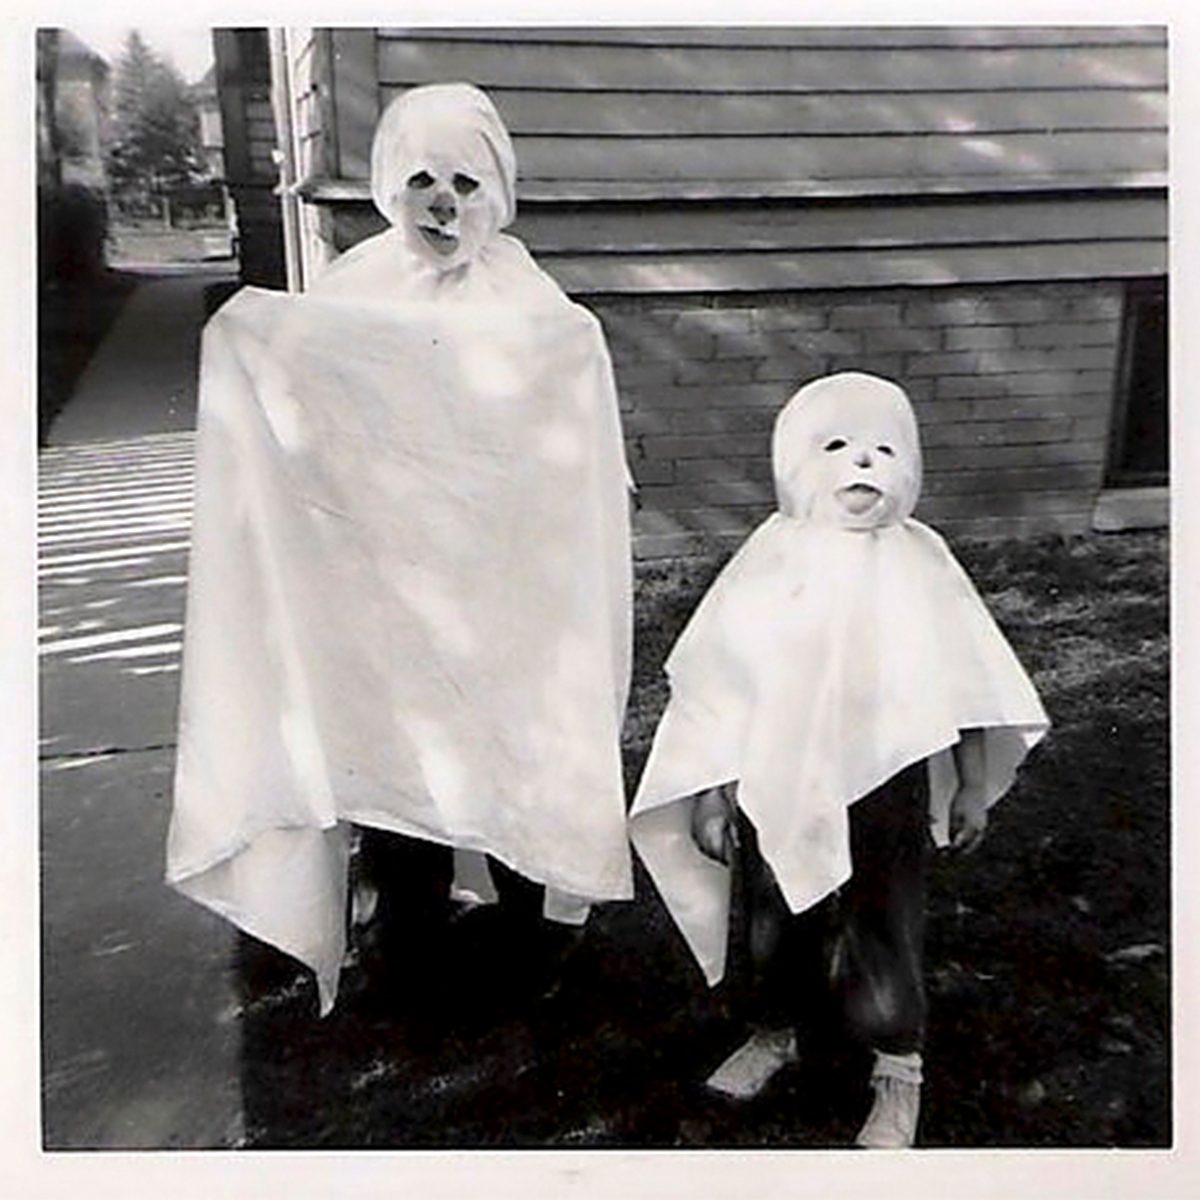 children in ghost costumes on Halloween